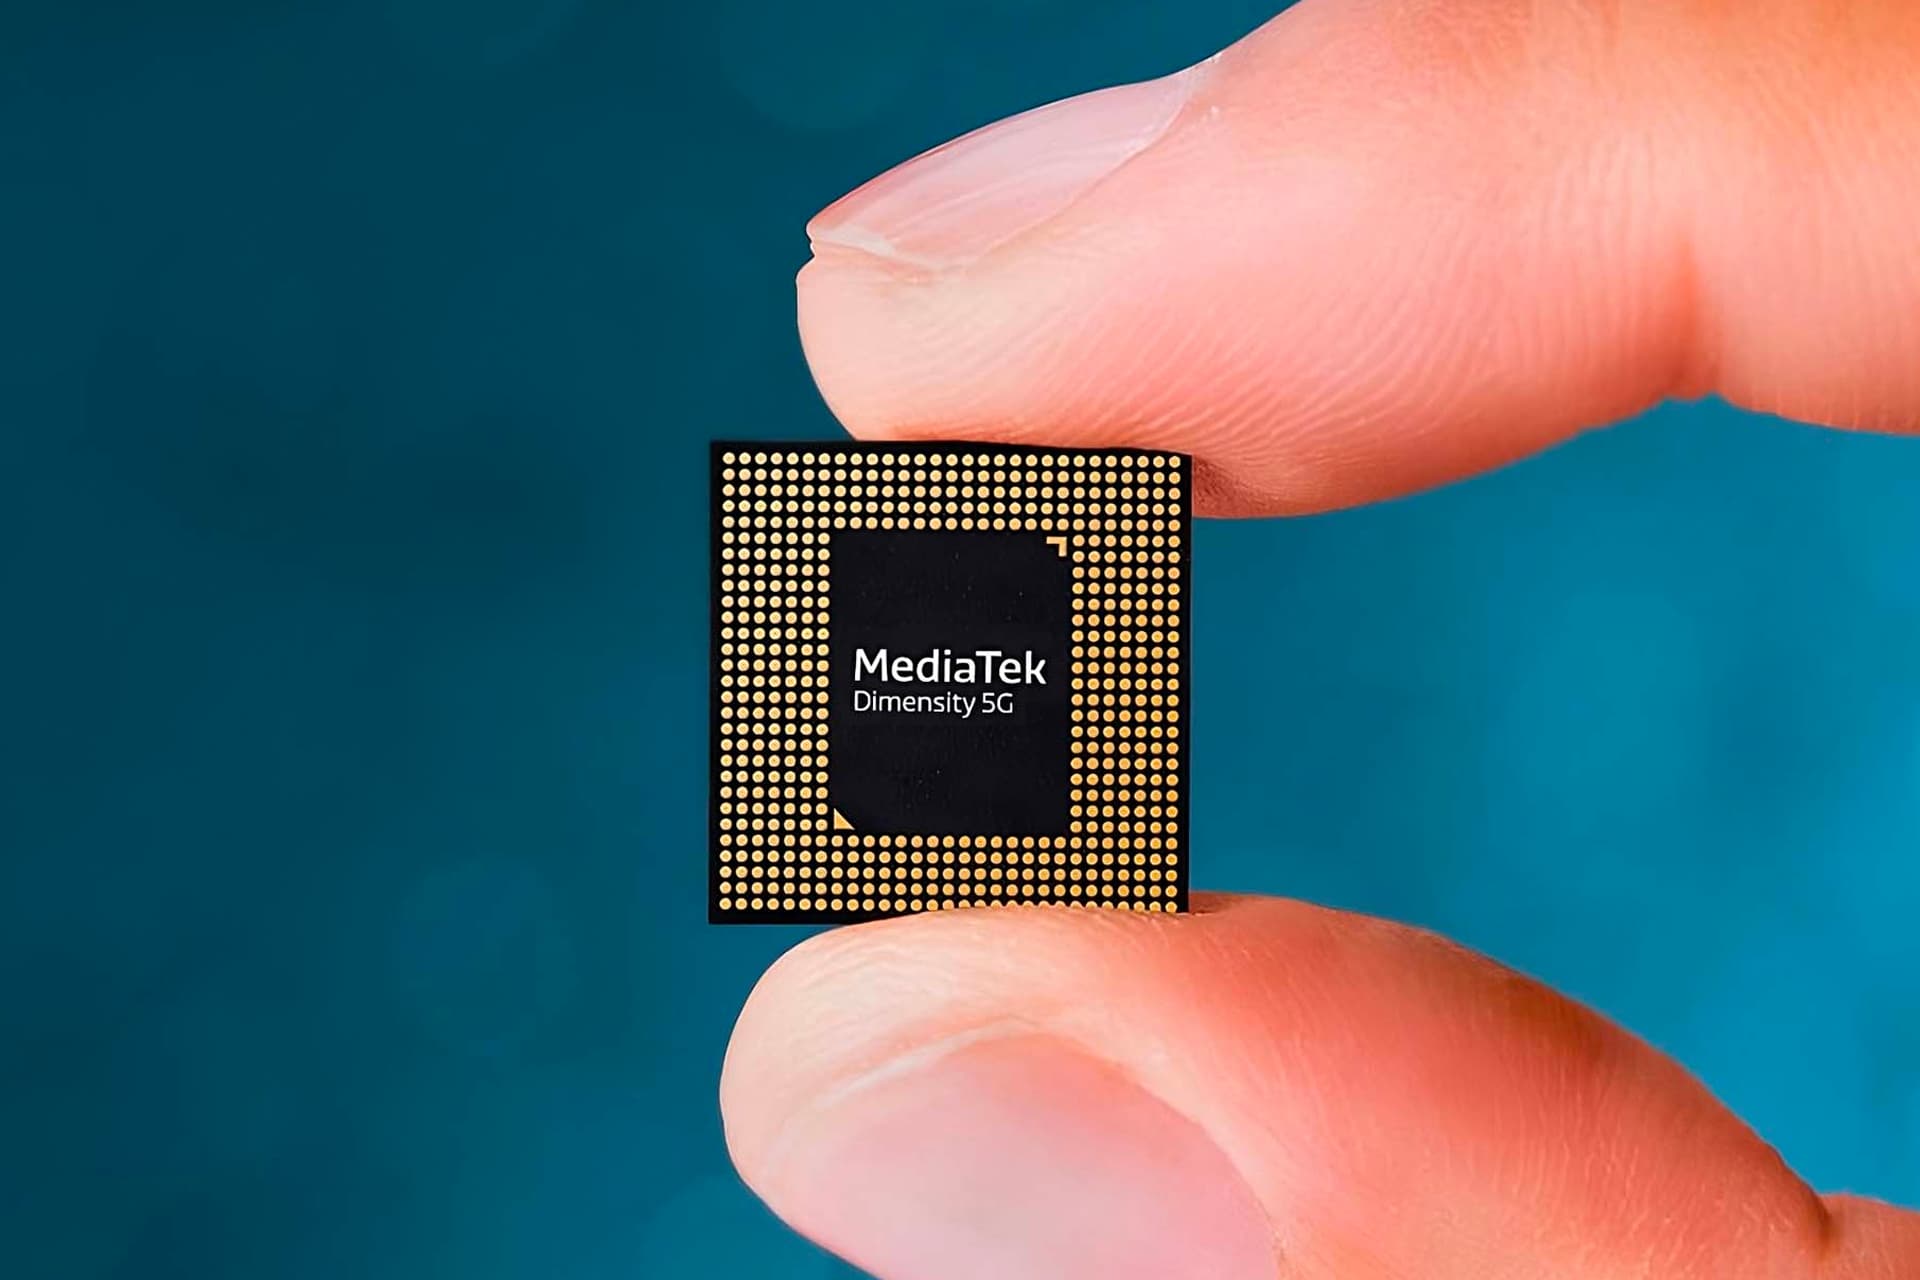 mediatek 5g chip soc in hand 6461de2da32dd7bdc5f7826b